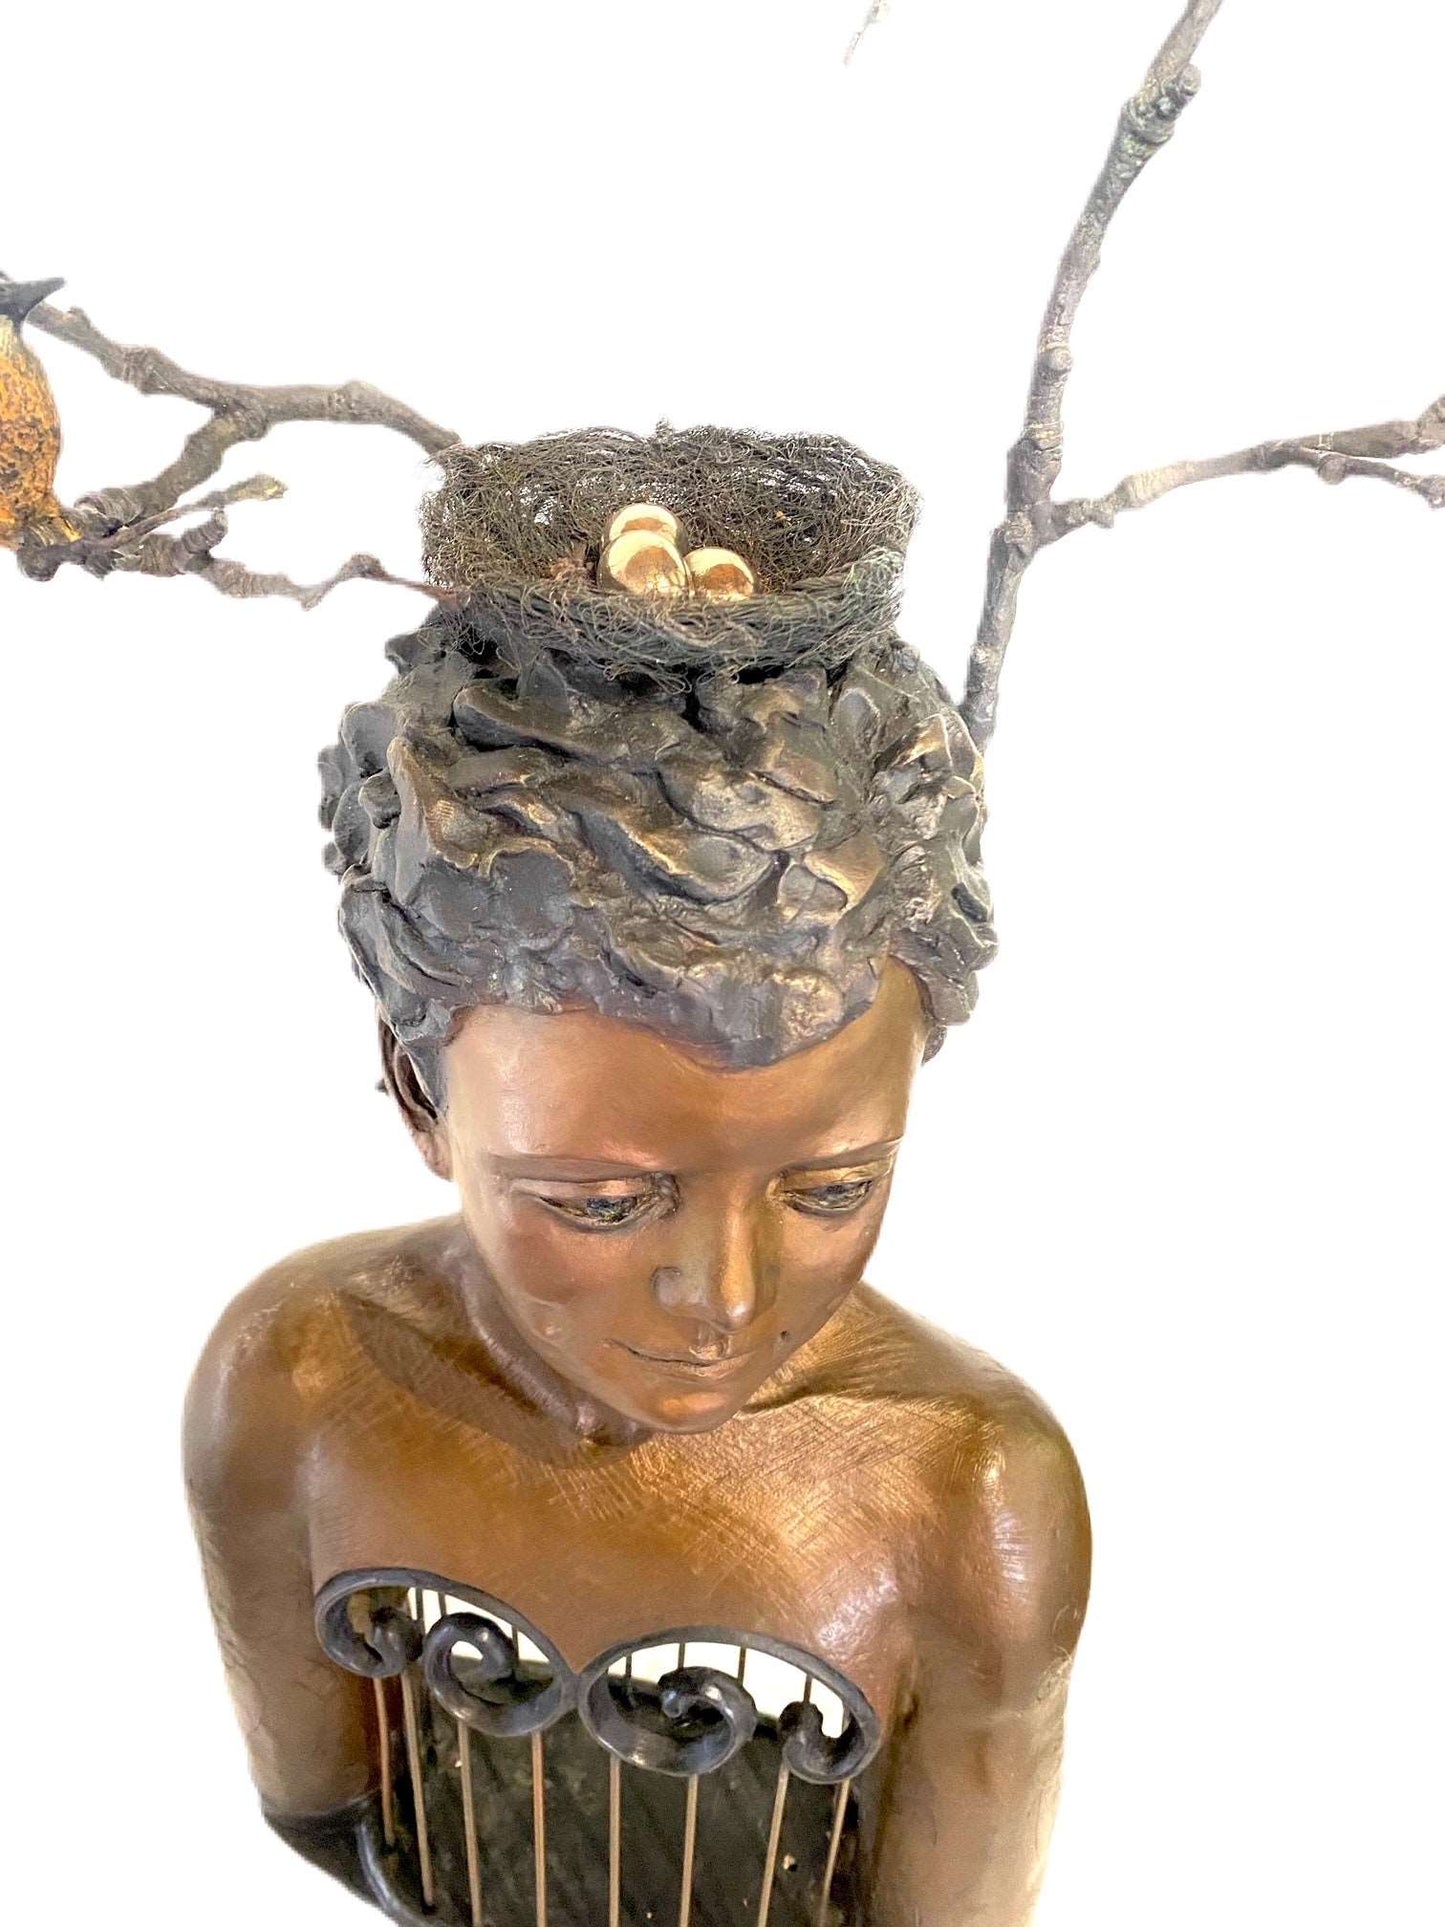 Birdcage Girl: Hope, Dreams, Freedom Maritza Breitenbach Sculpture JULIE MILLER AFRICAN CONTEMPORARY